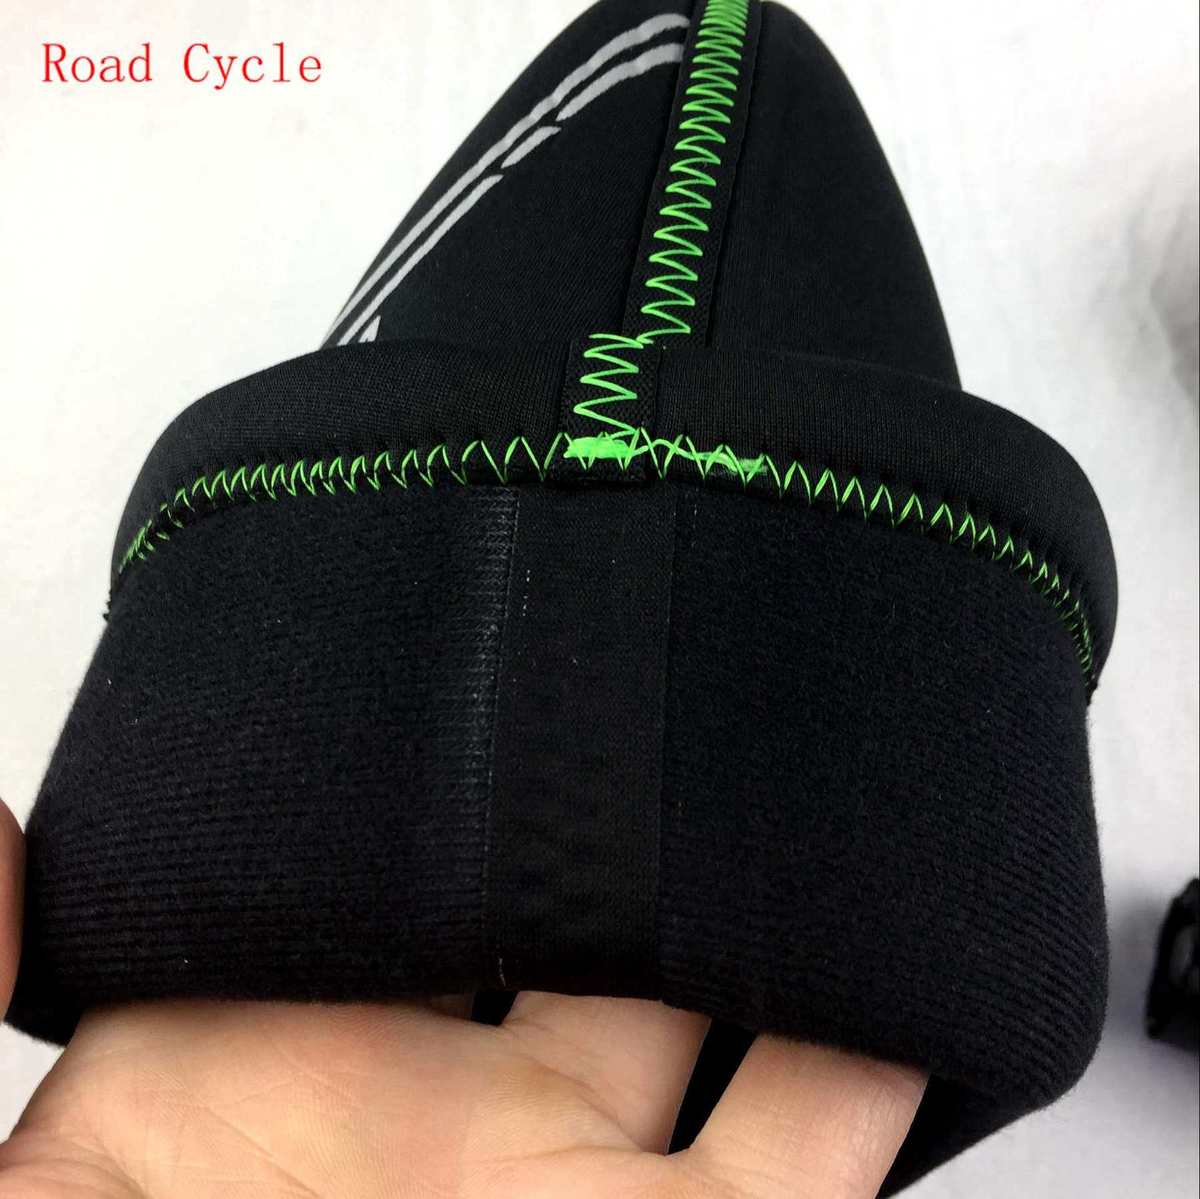 Windproof Road Handlebar Covers Bicycle Cycling Gloves warm Bike full fingers Winter Gloves MTB rainproof